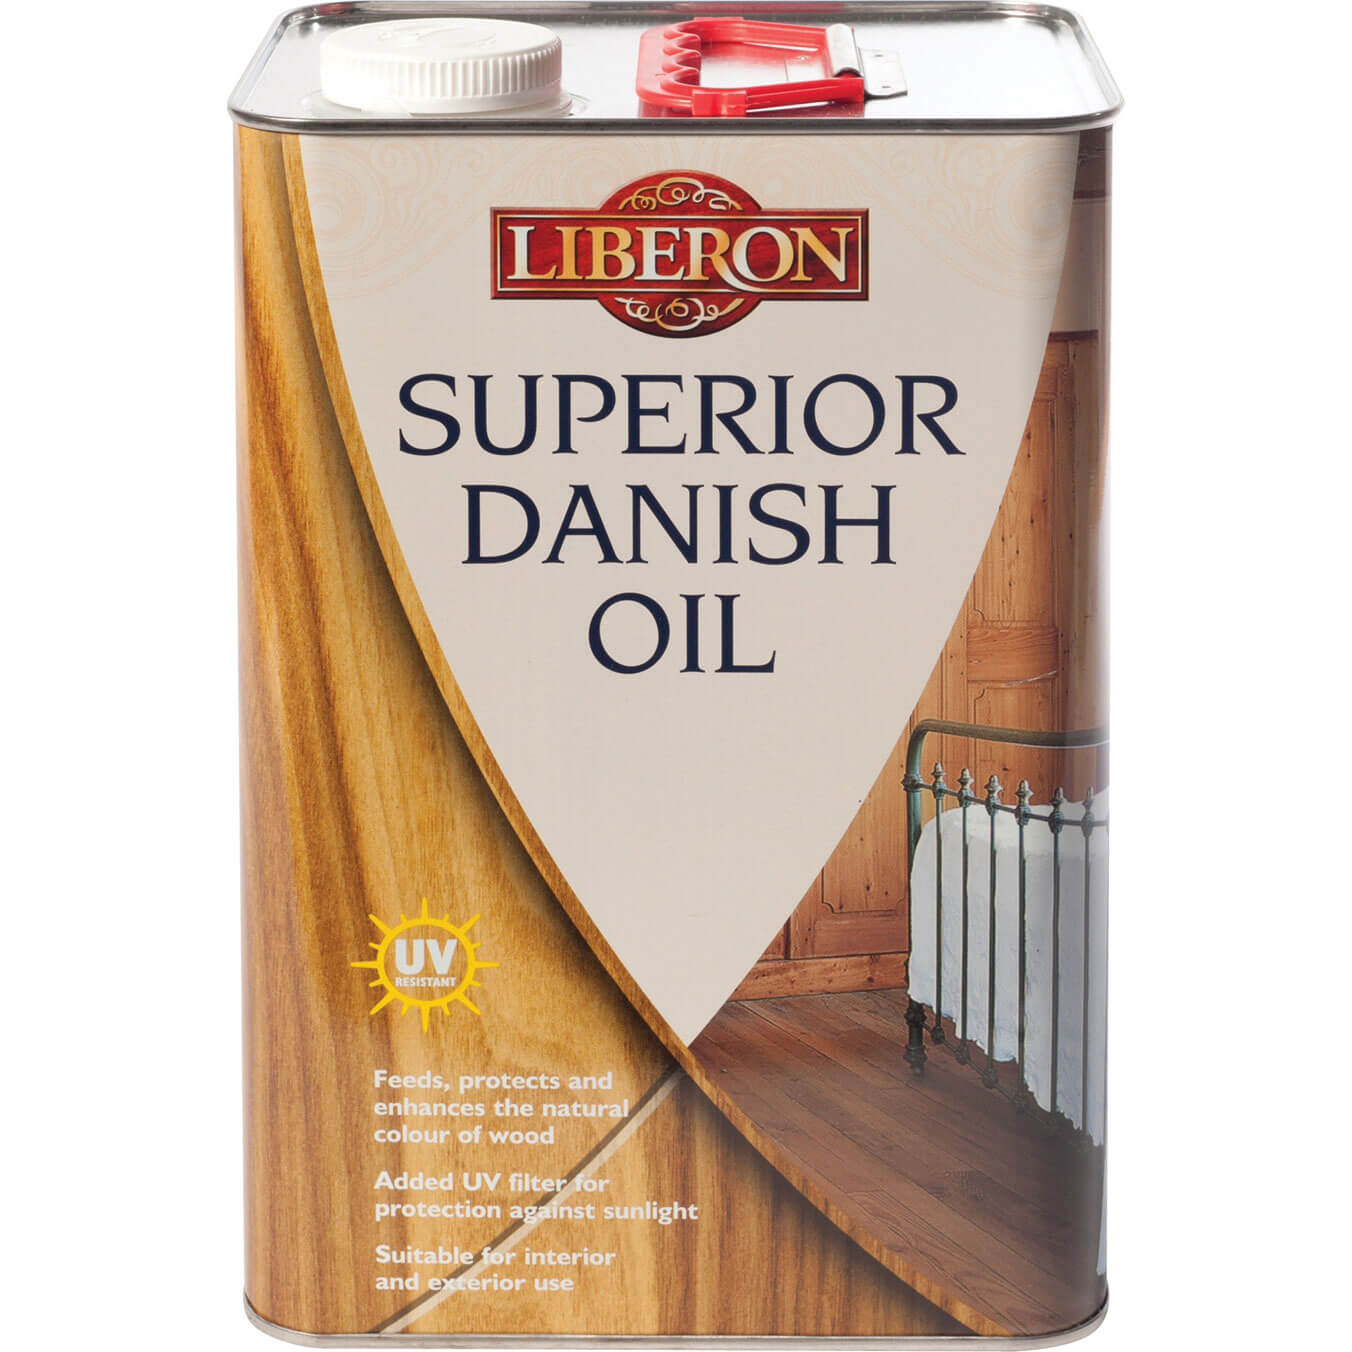 Liberon Superior Danish Oil 5 Litre